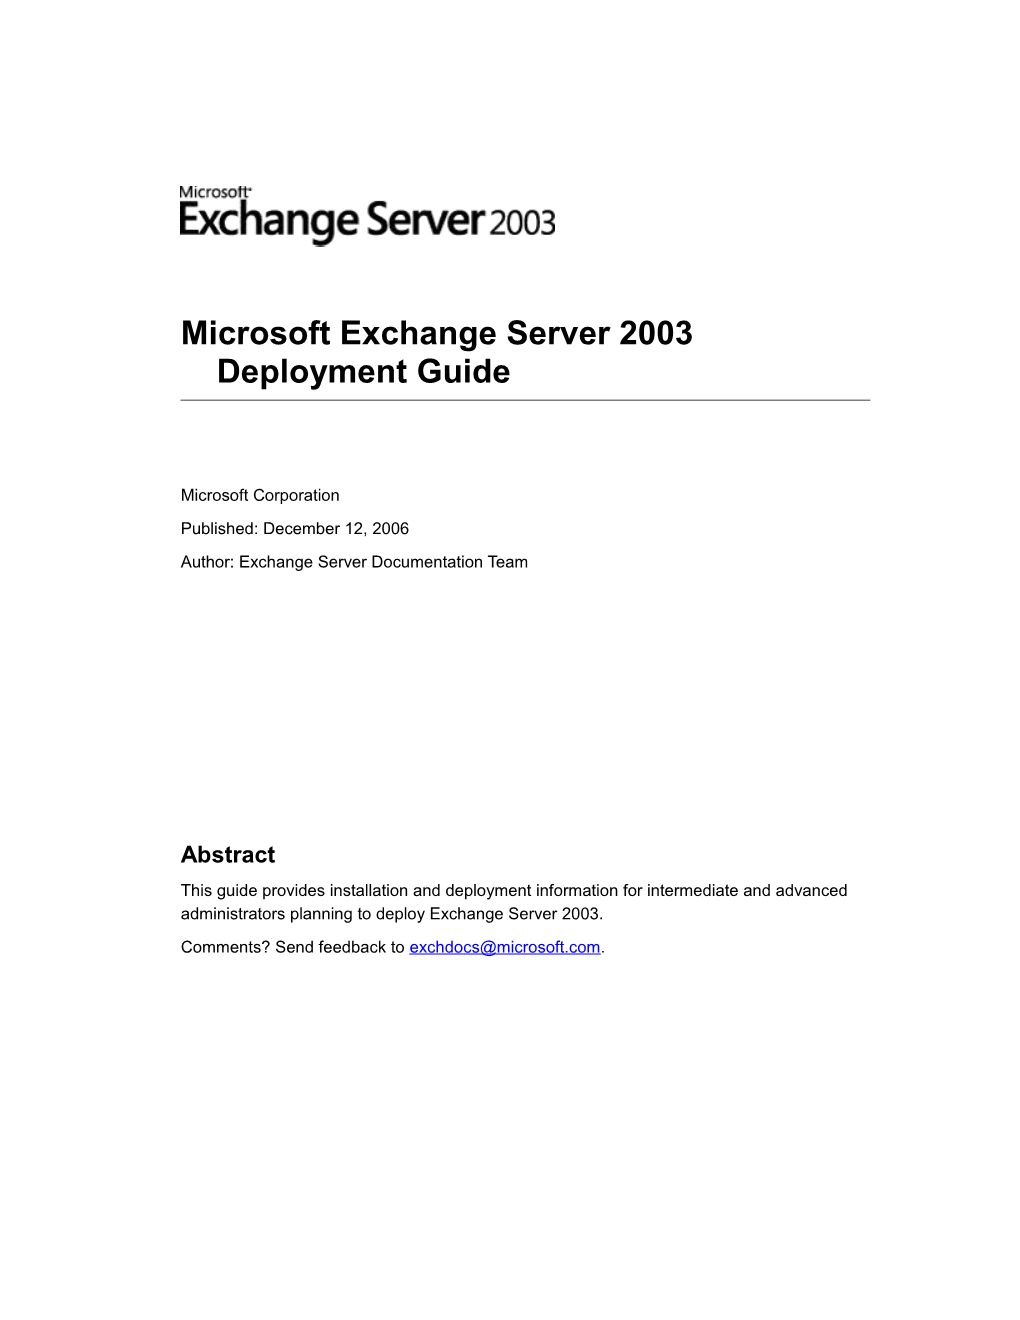 Microsoft Exchange Server 2003 Deployment Guide